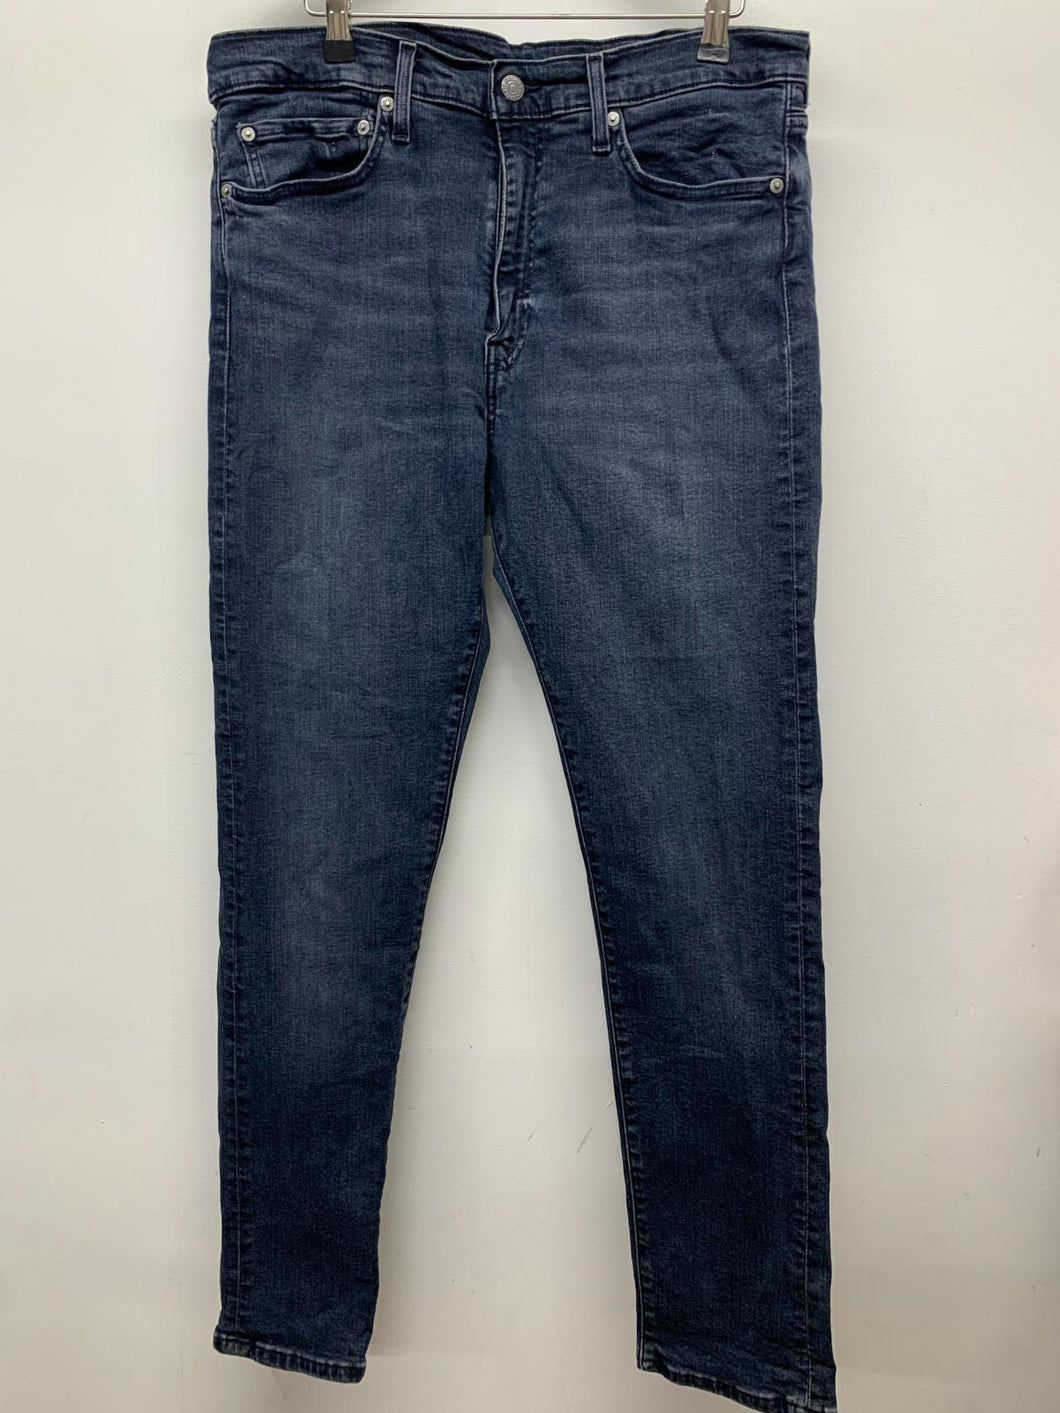 LEVI'S Men's Blue Marine Light Wash Cotton Jeans Straight Premium Denim W36 L32